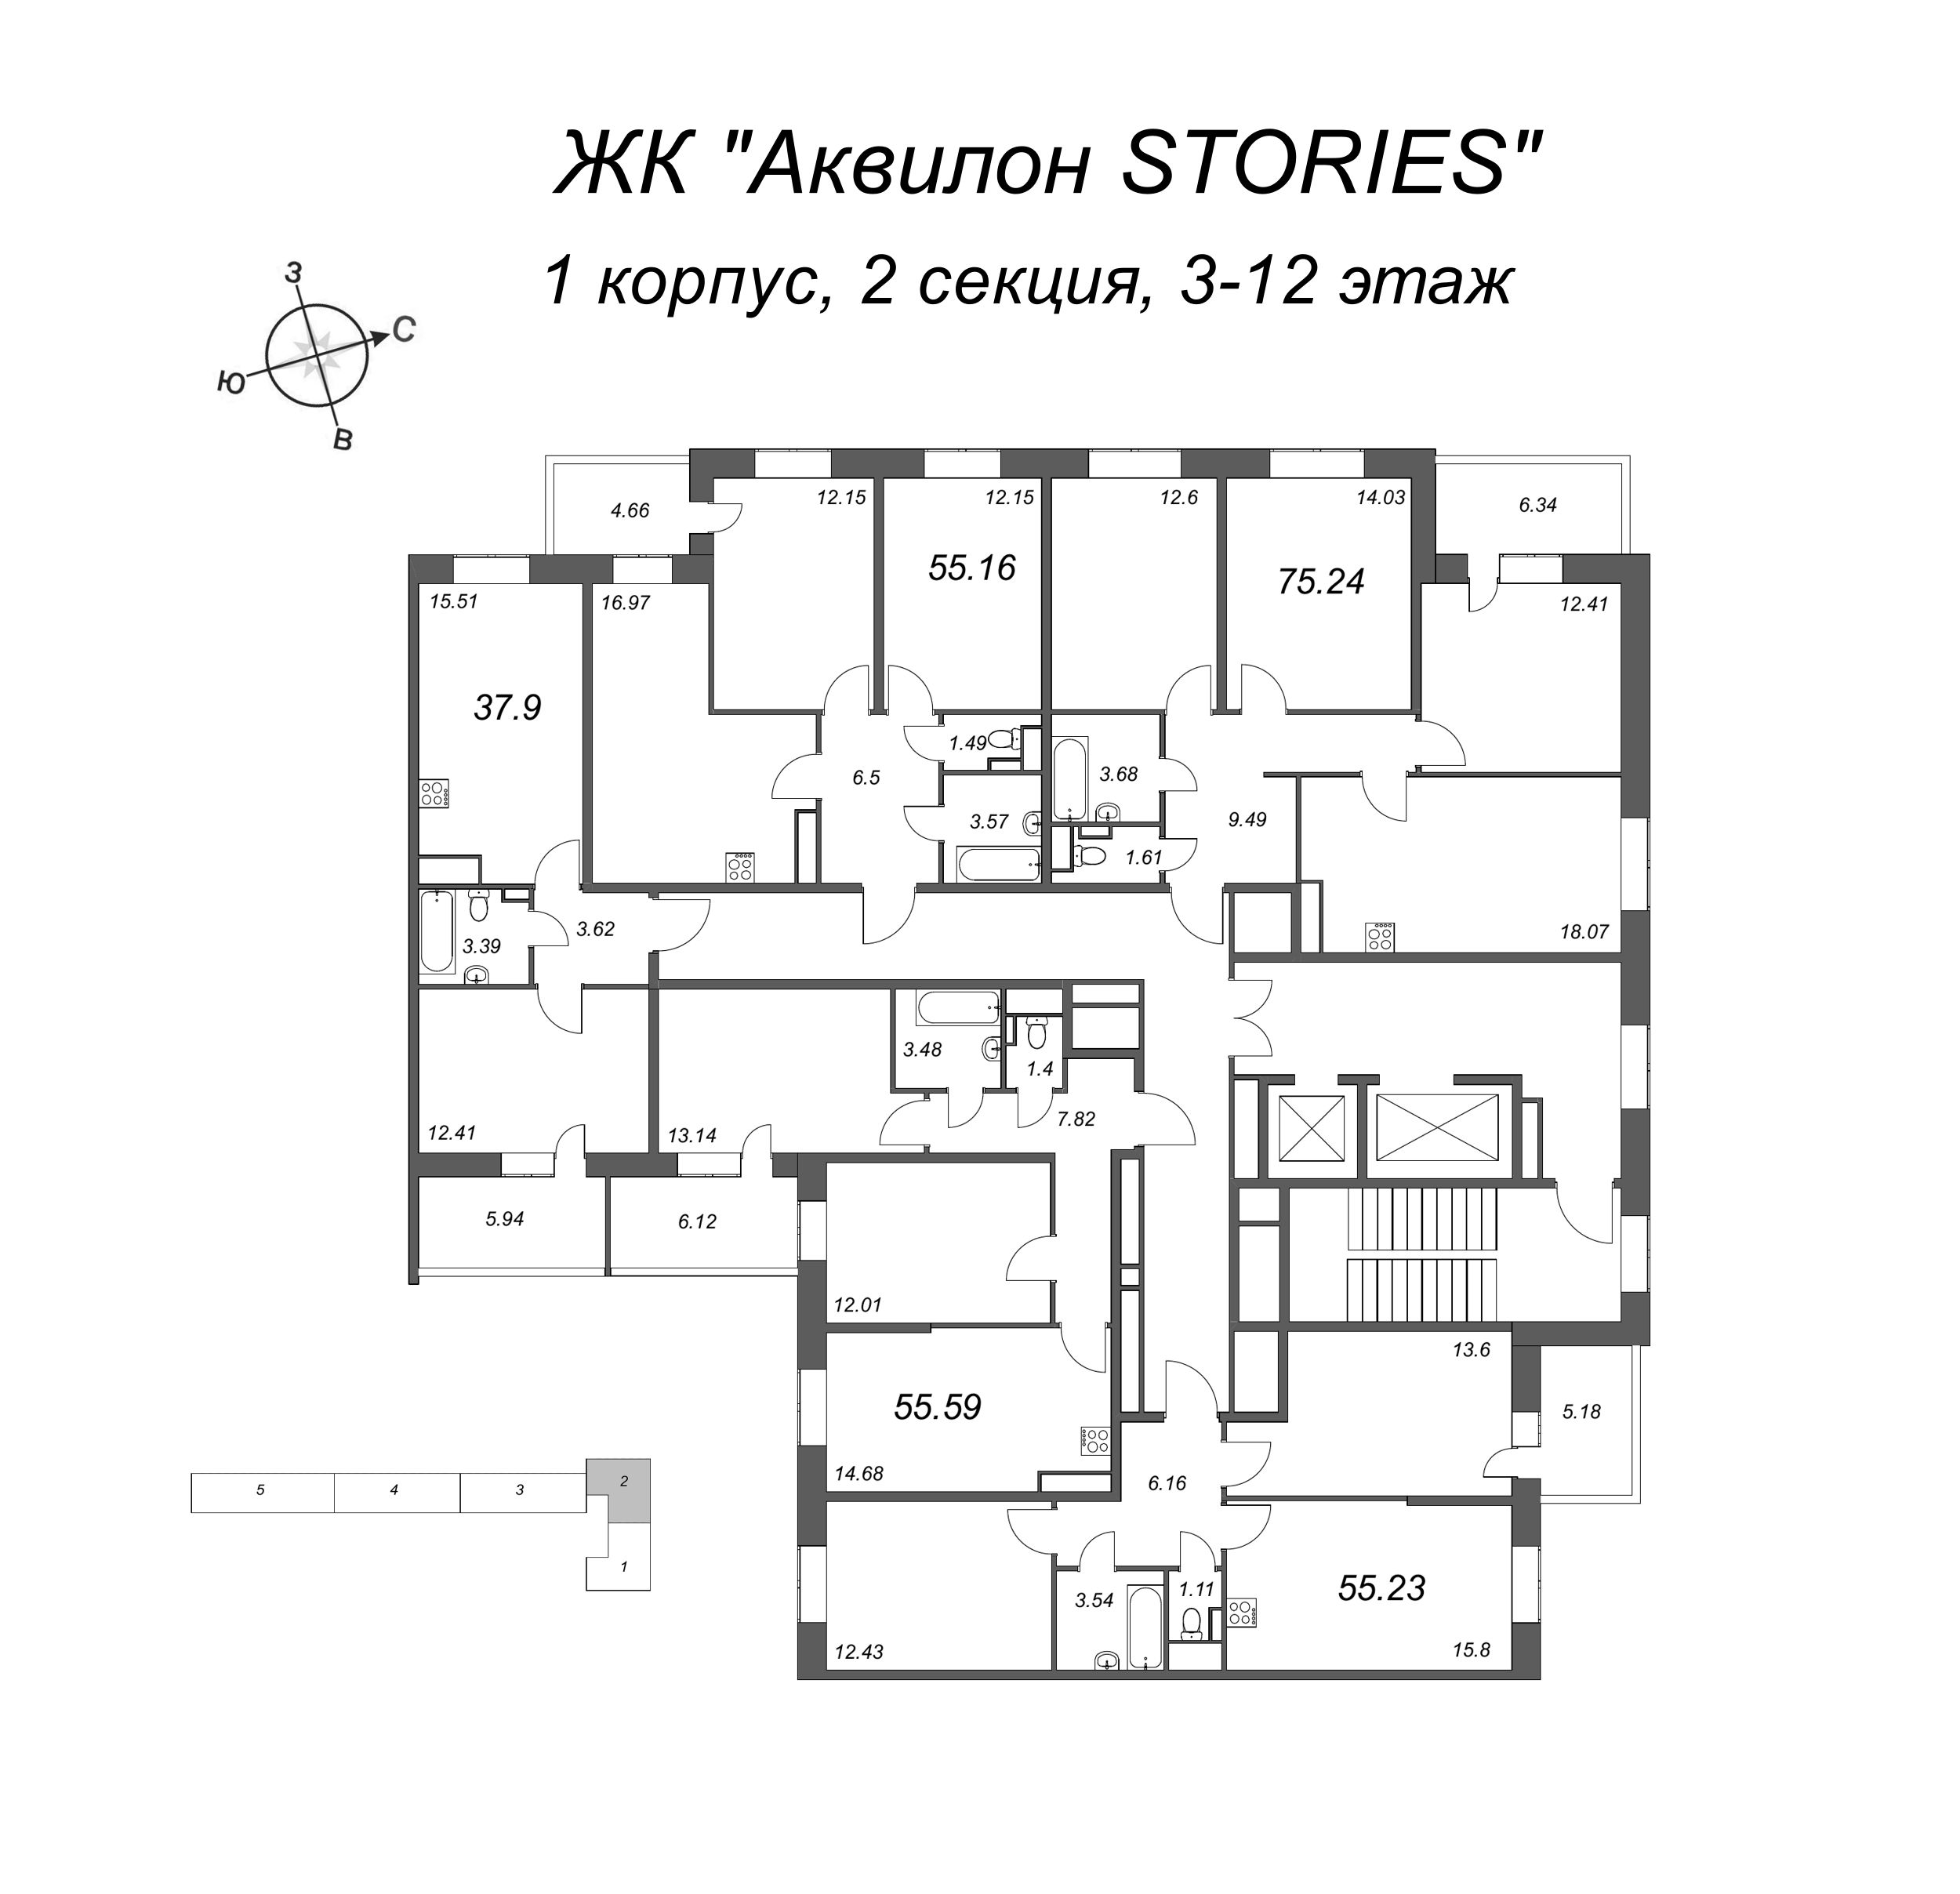 2-комнатная (Евро) квартира, 38.2 м² в ЖК "Аквилон Stories" - планировка этажа